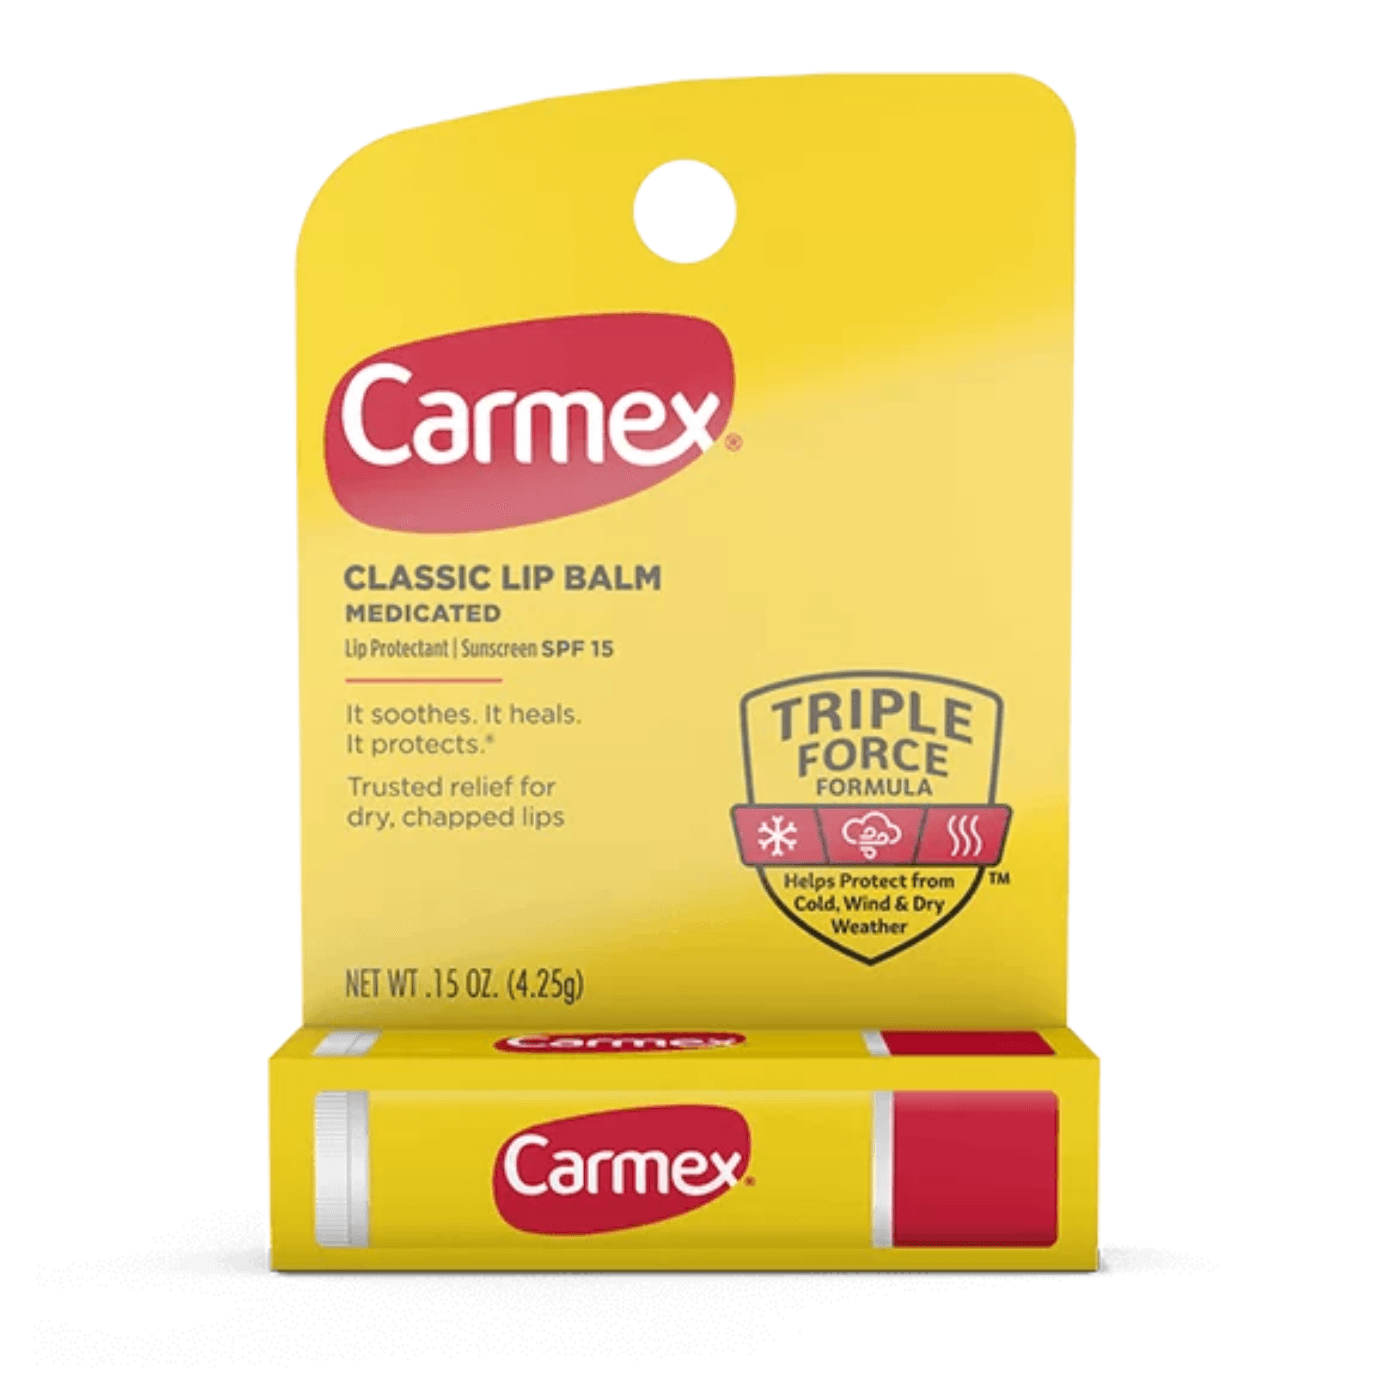 Carmex Classic Medical Lip Balm with SPF 15